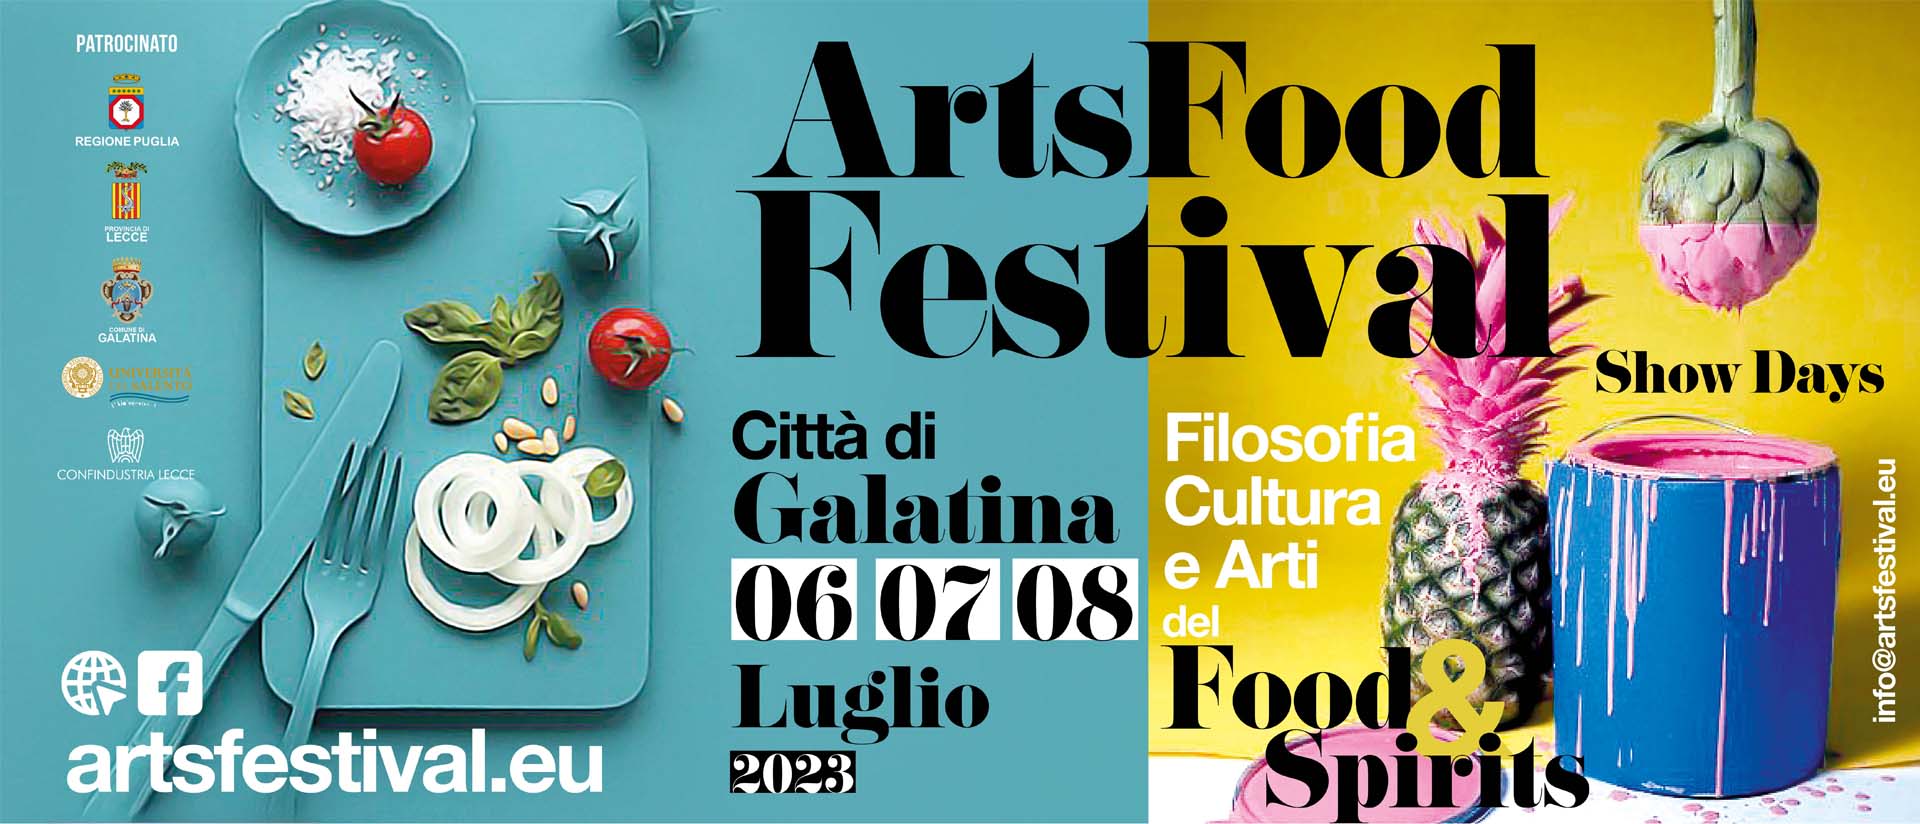 ARTS Festival Galatina